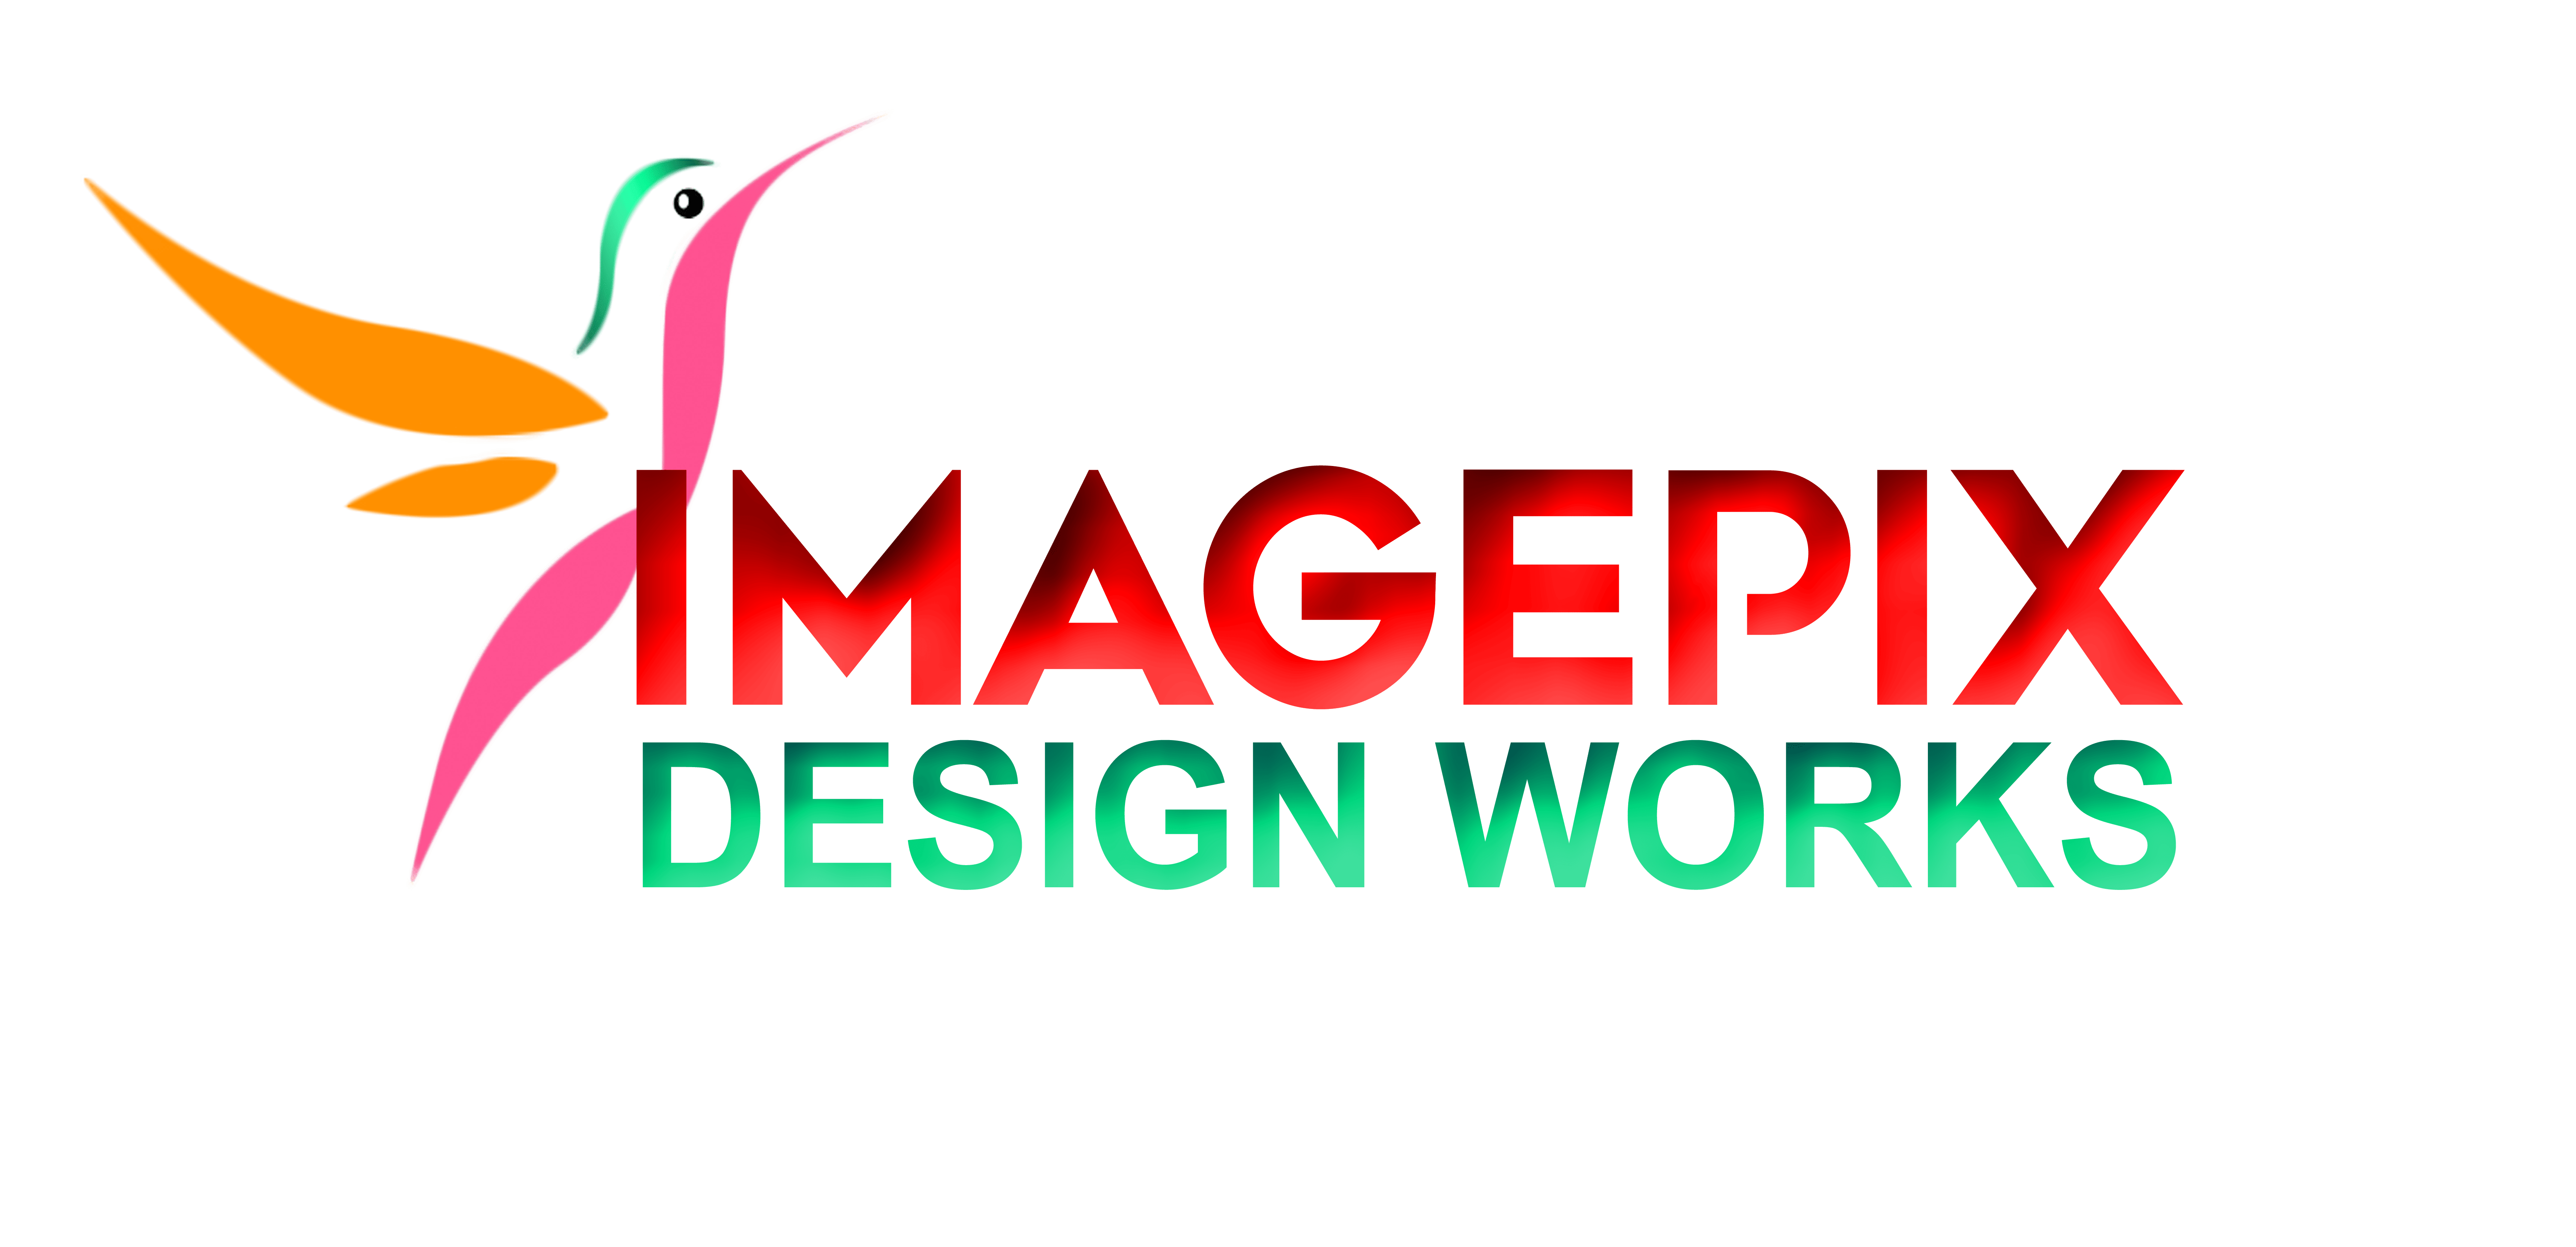 ImagePix Design Works